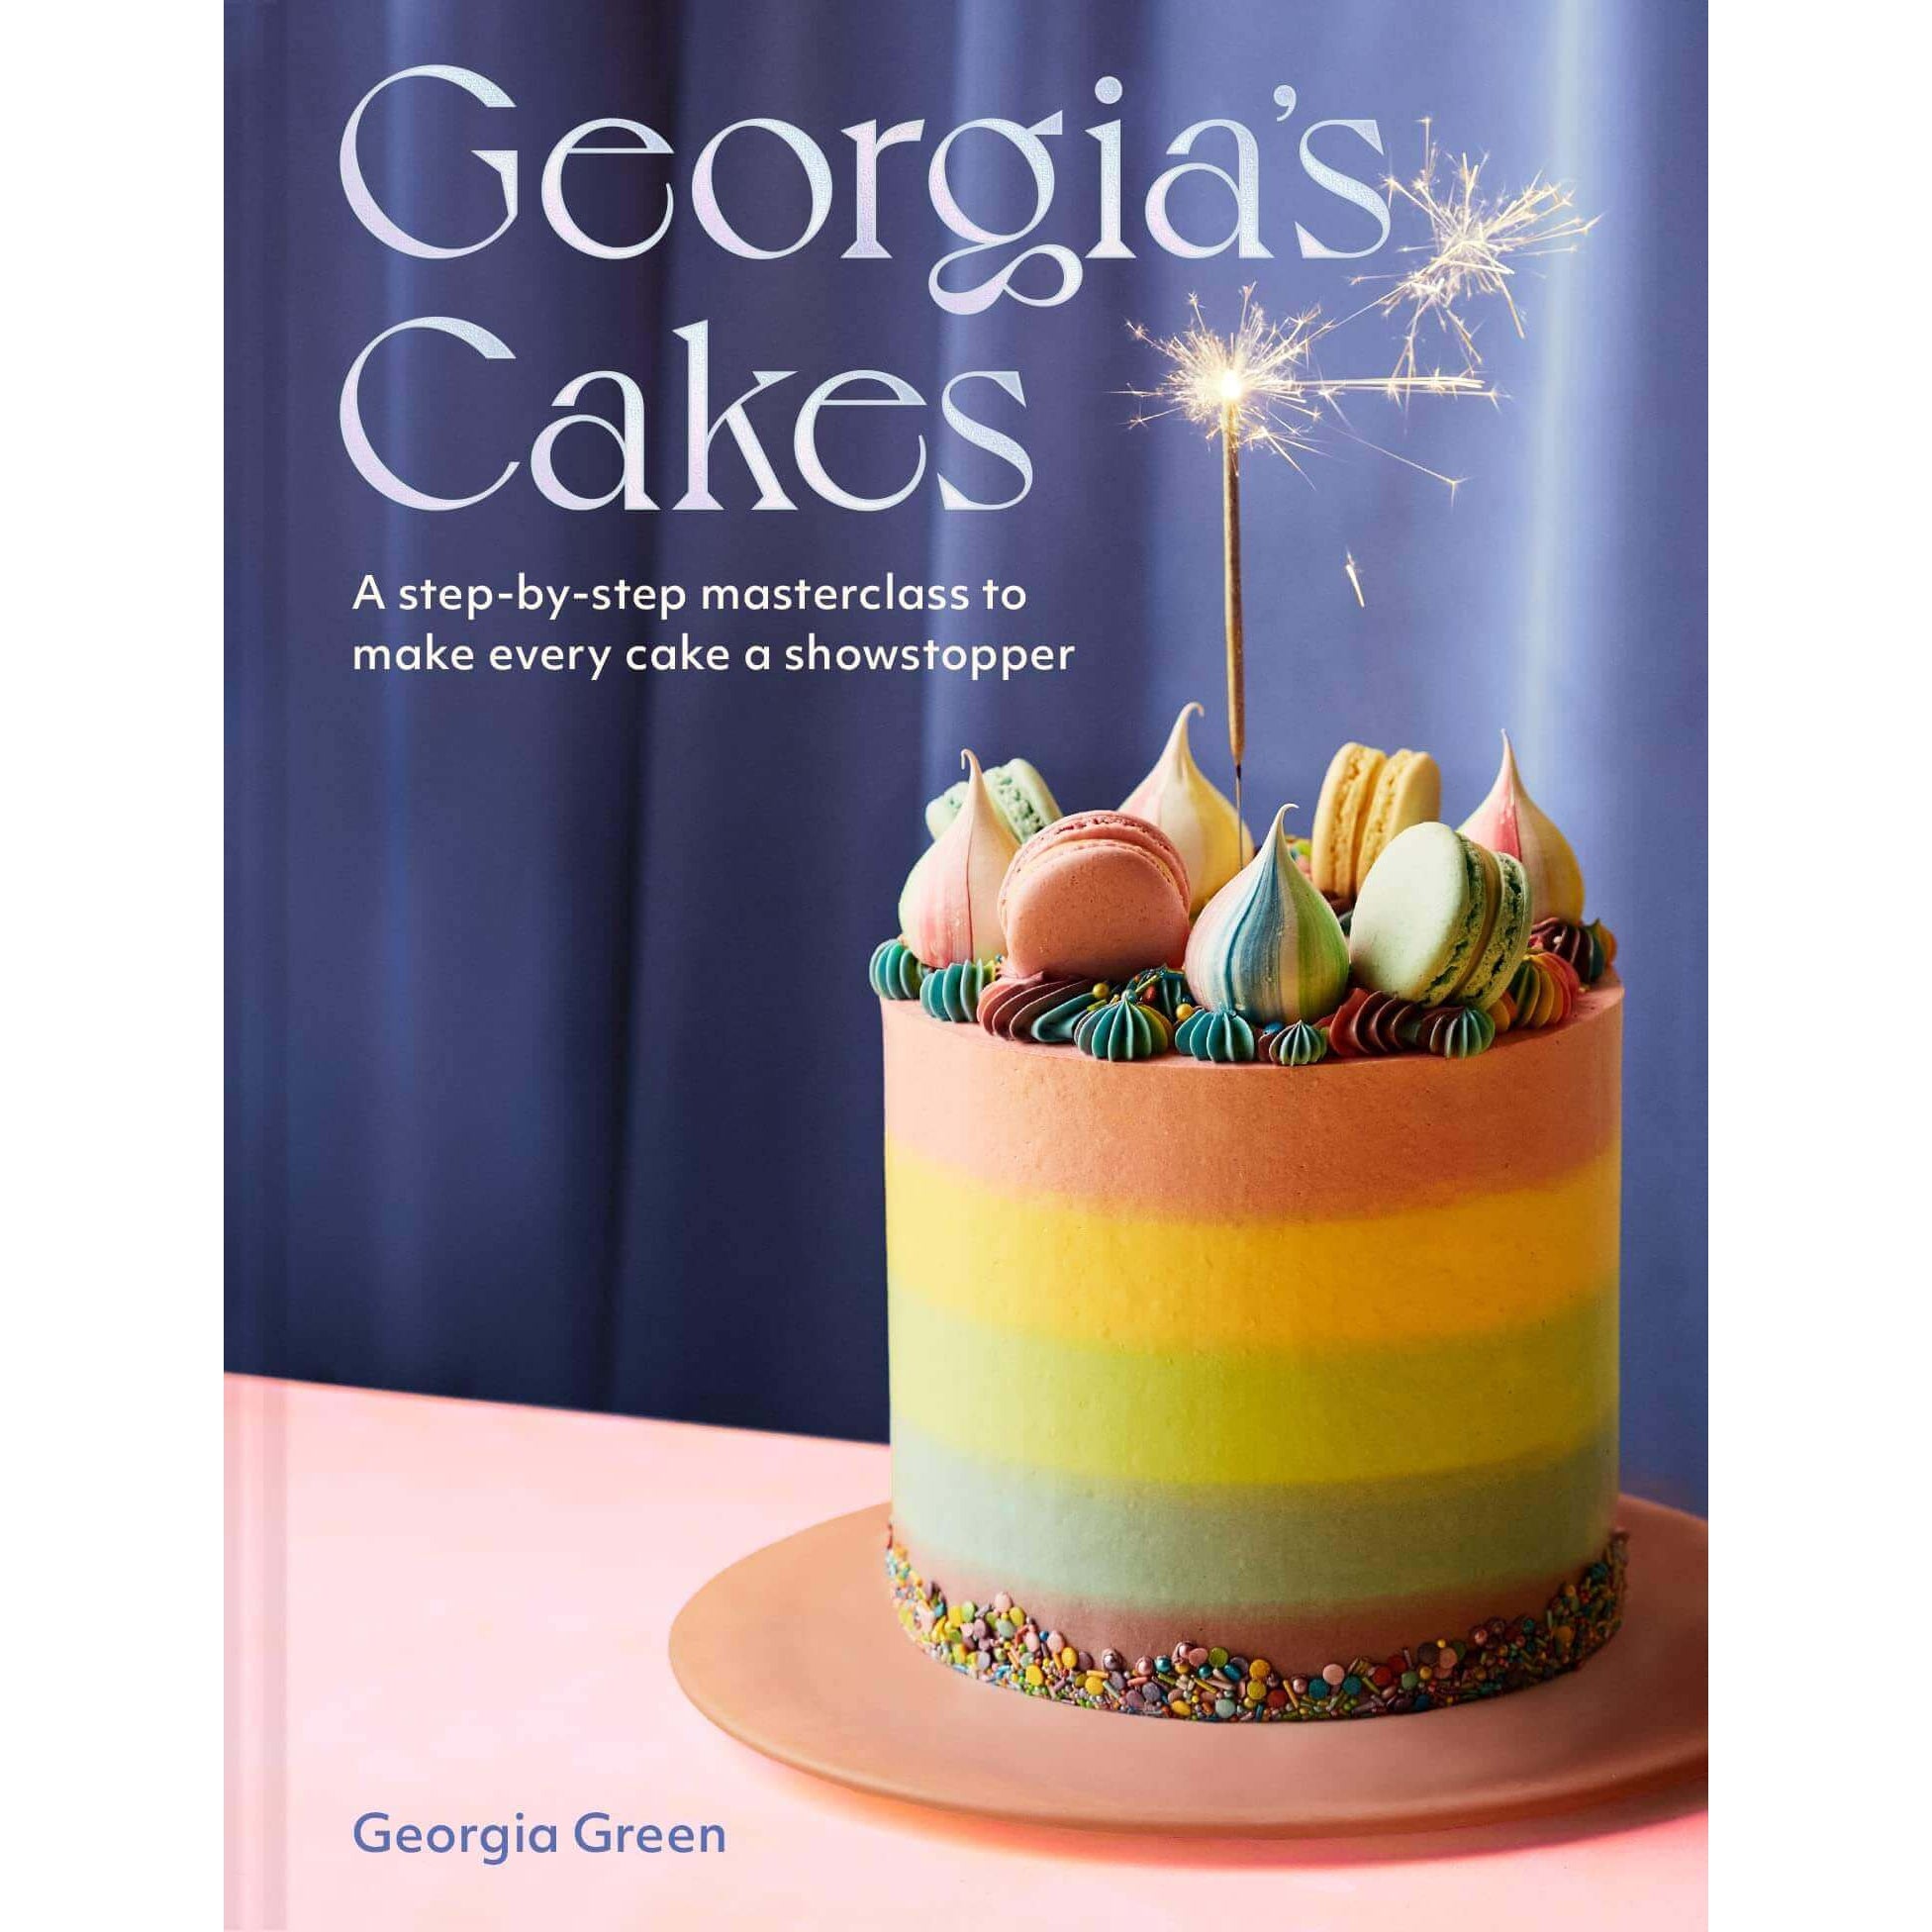 Georgia's Cakes: A Step-by-Step Masterclass